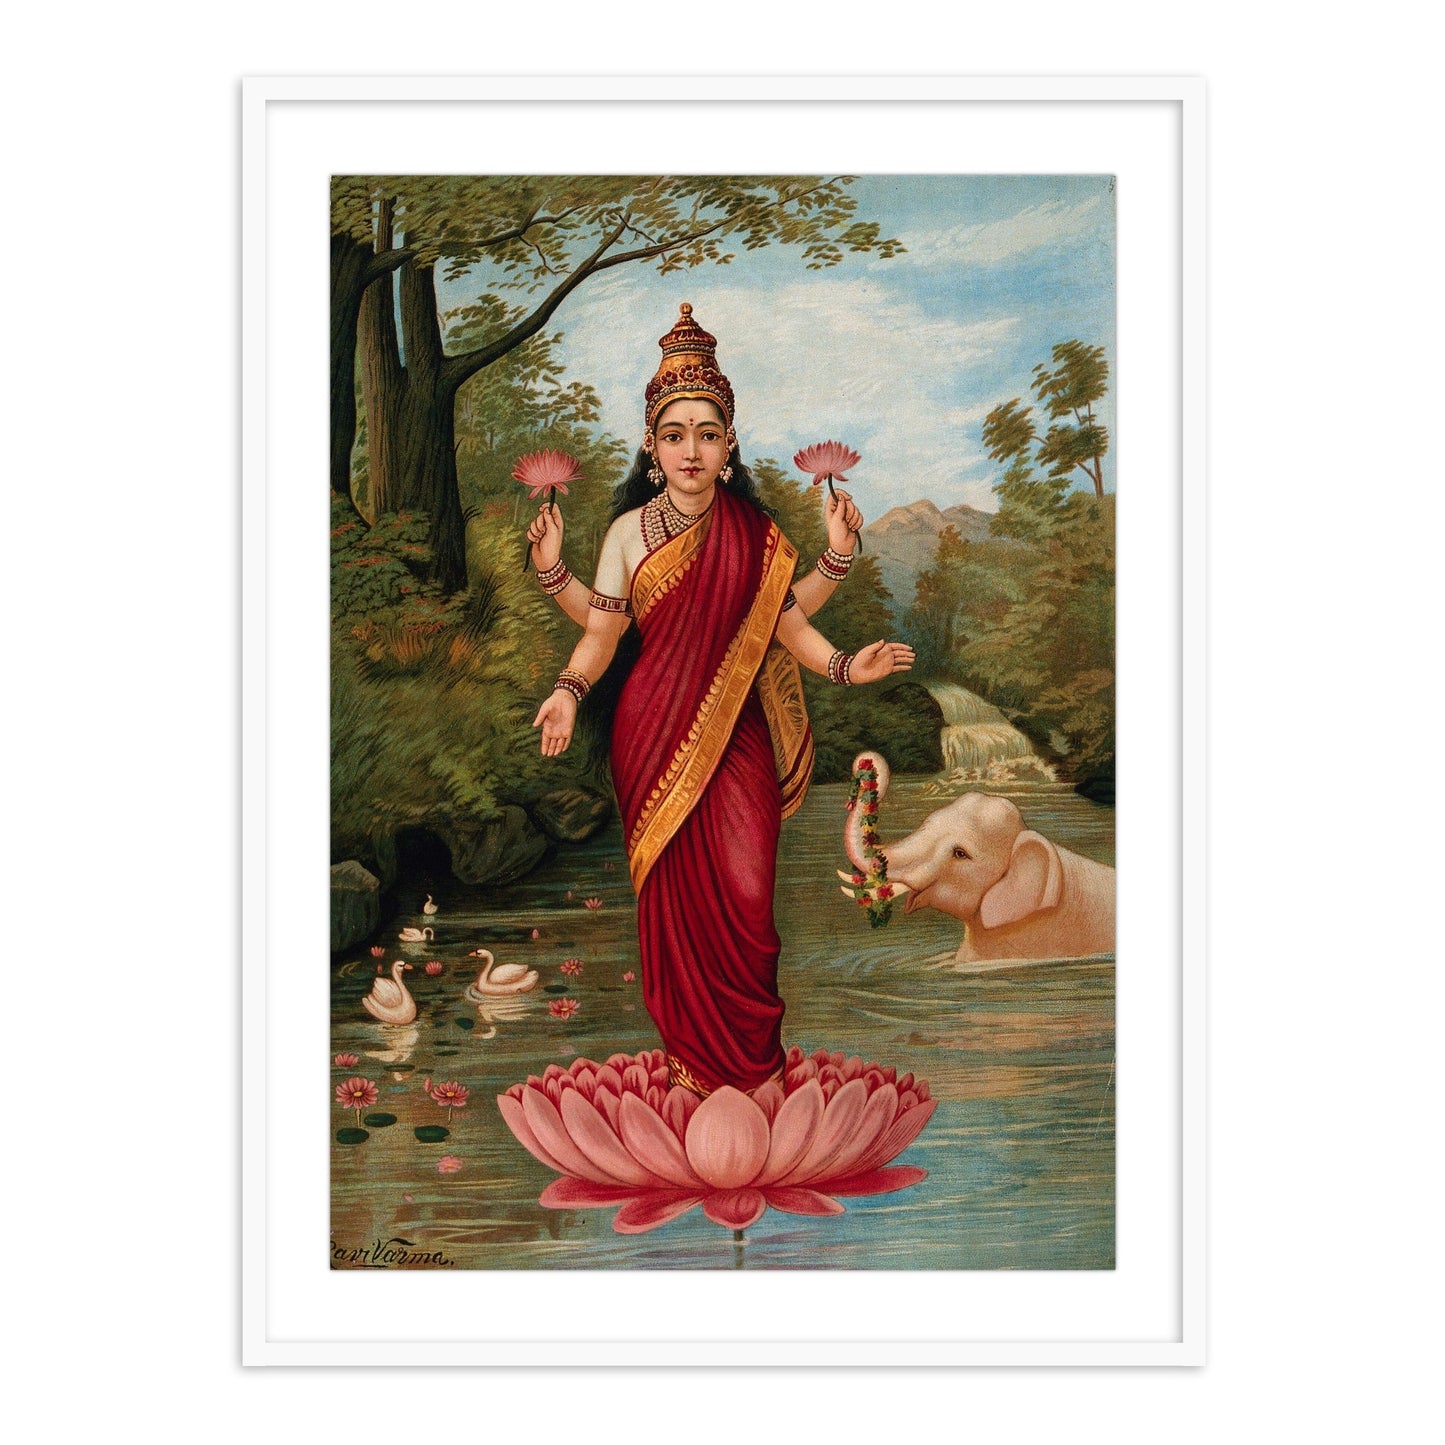 Lakshmi on her Lotus by Raja Ravi Varma Wall Art Print for Home Decor